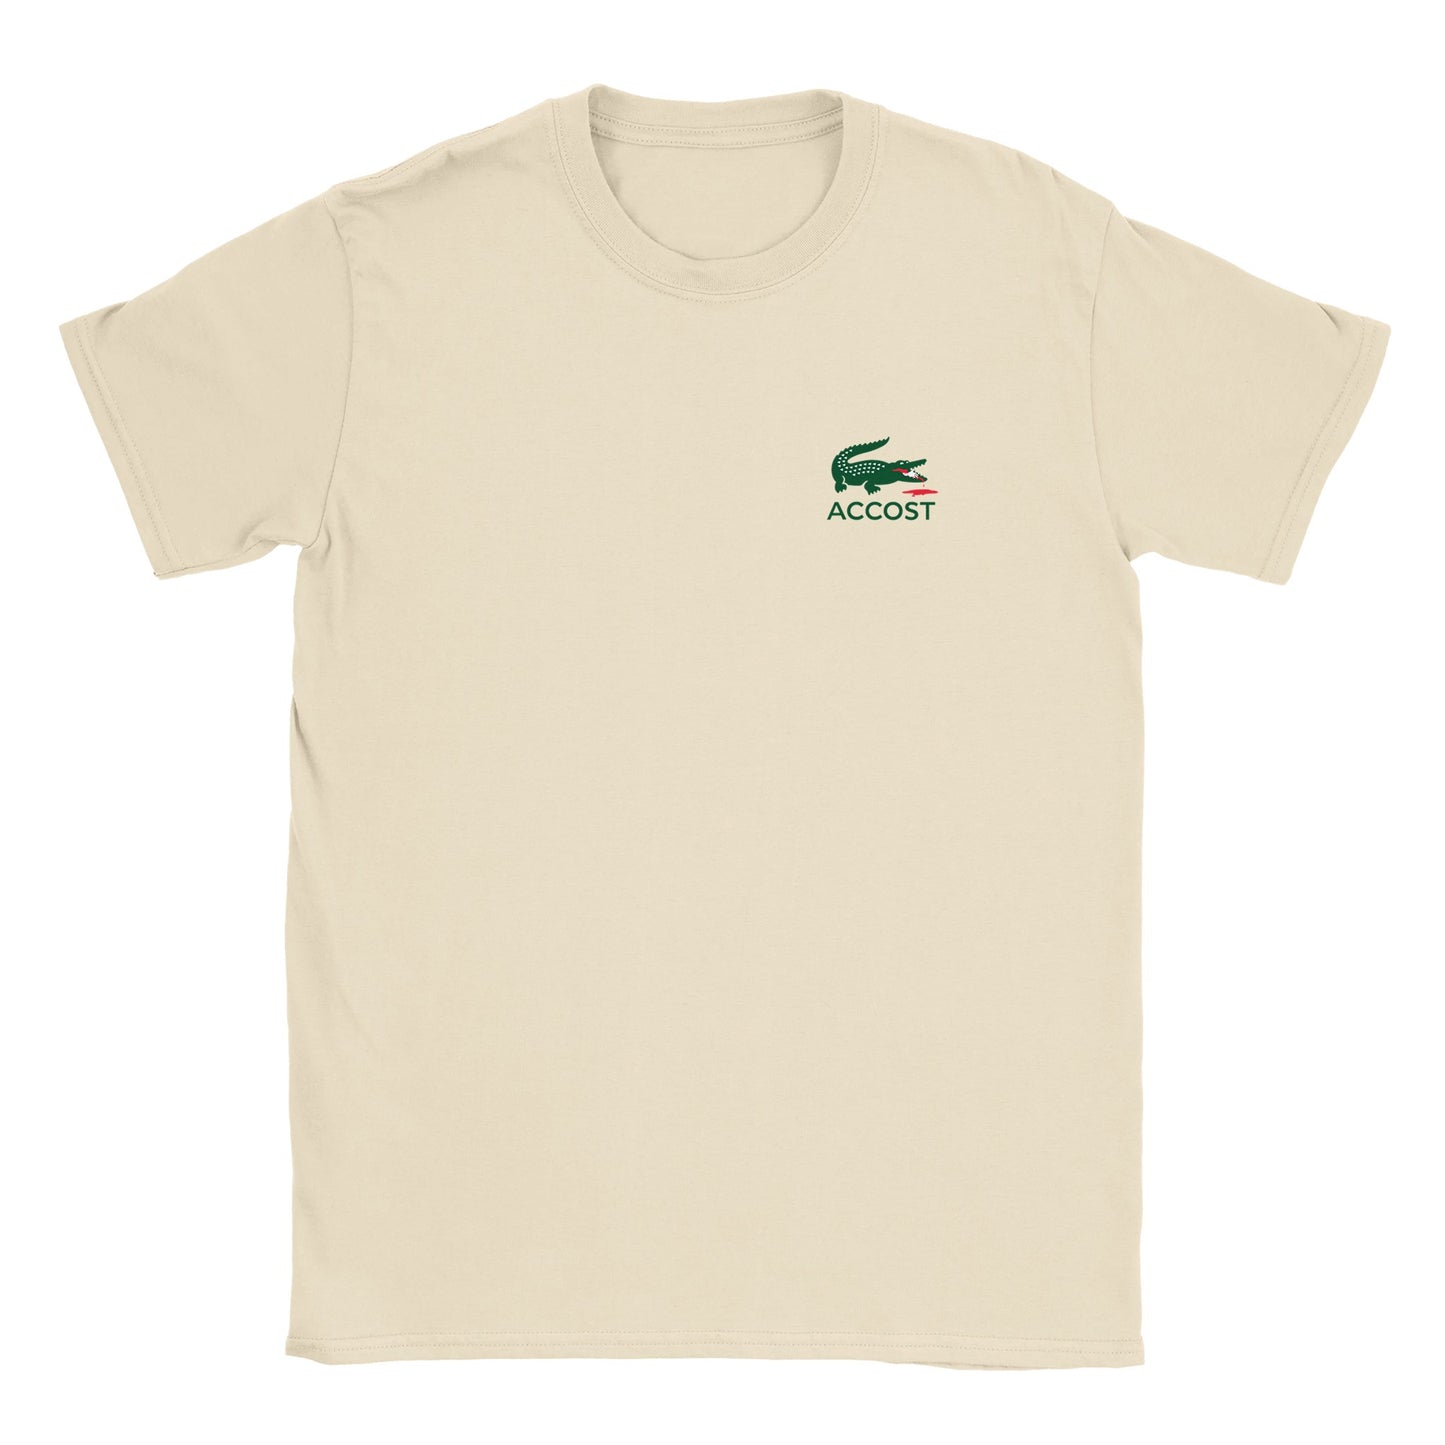 Accost Brand T-shirt - Unisex Crewneck T-shirt